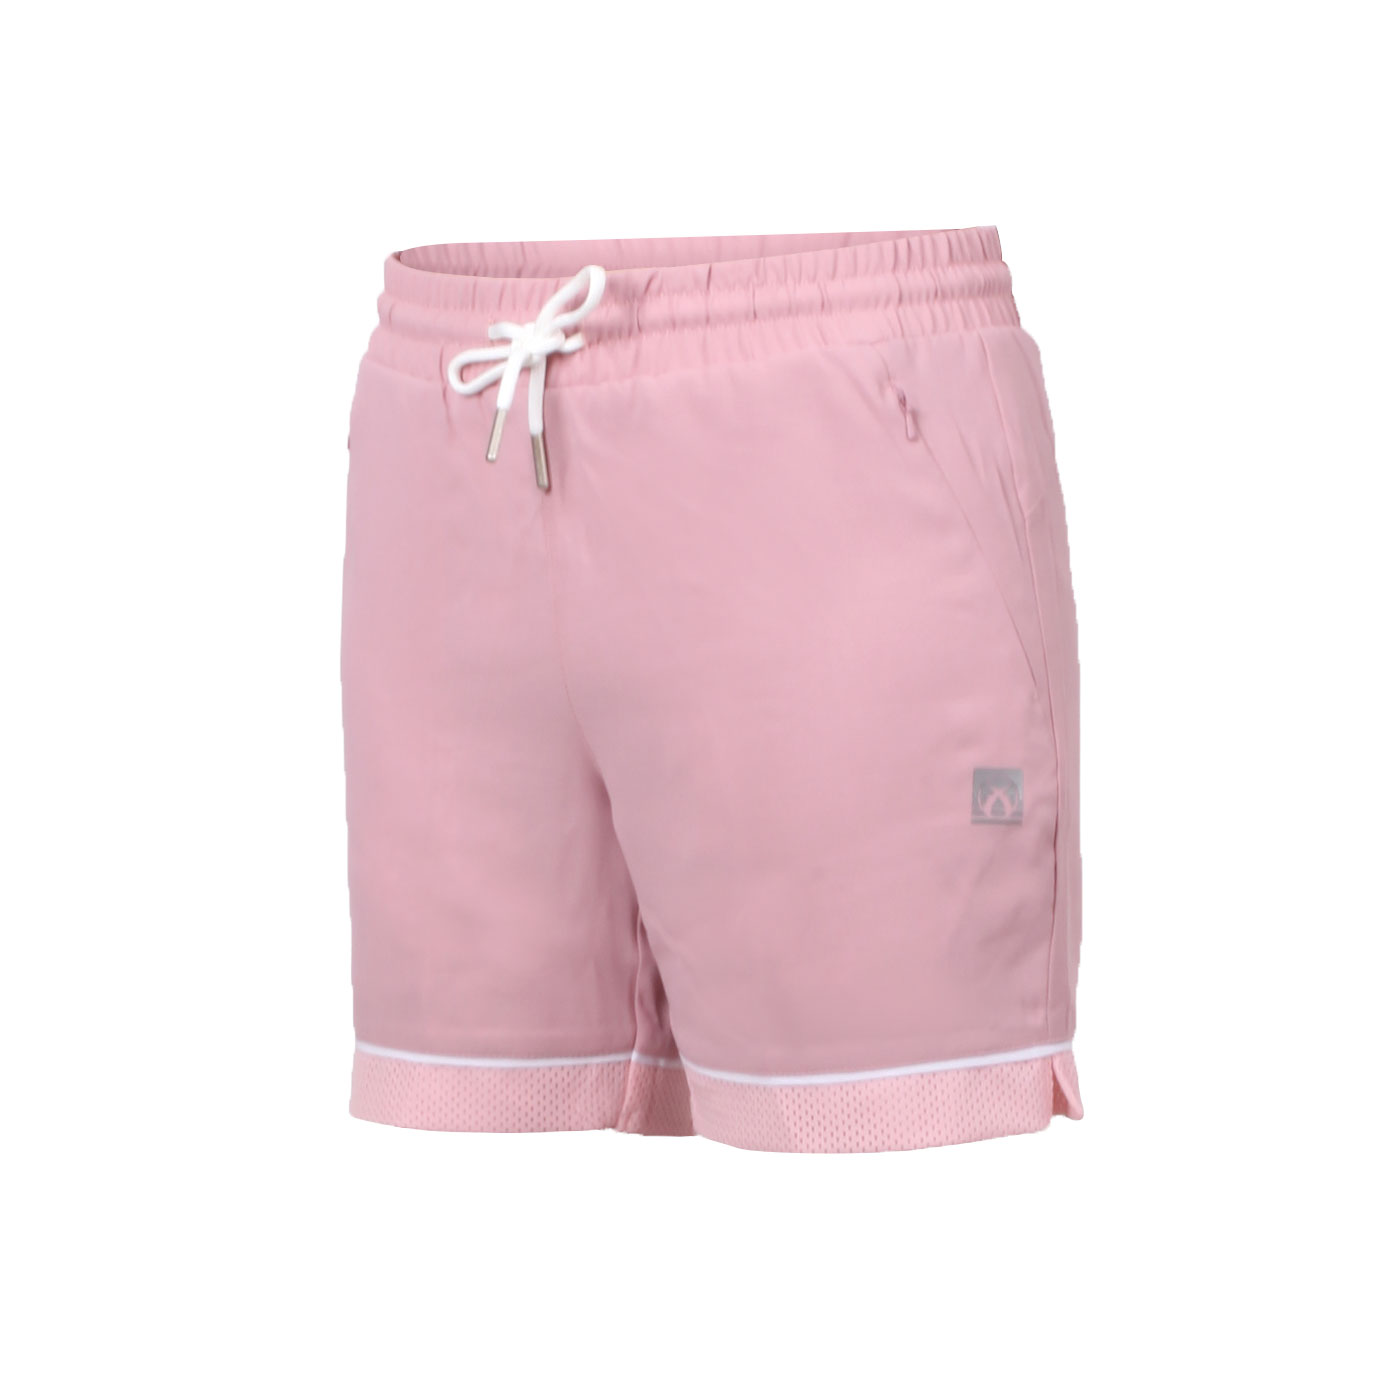 FIRESTAR 女款彈性運動短褲  CL322-43 - 珊瑚粉銀